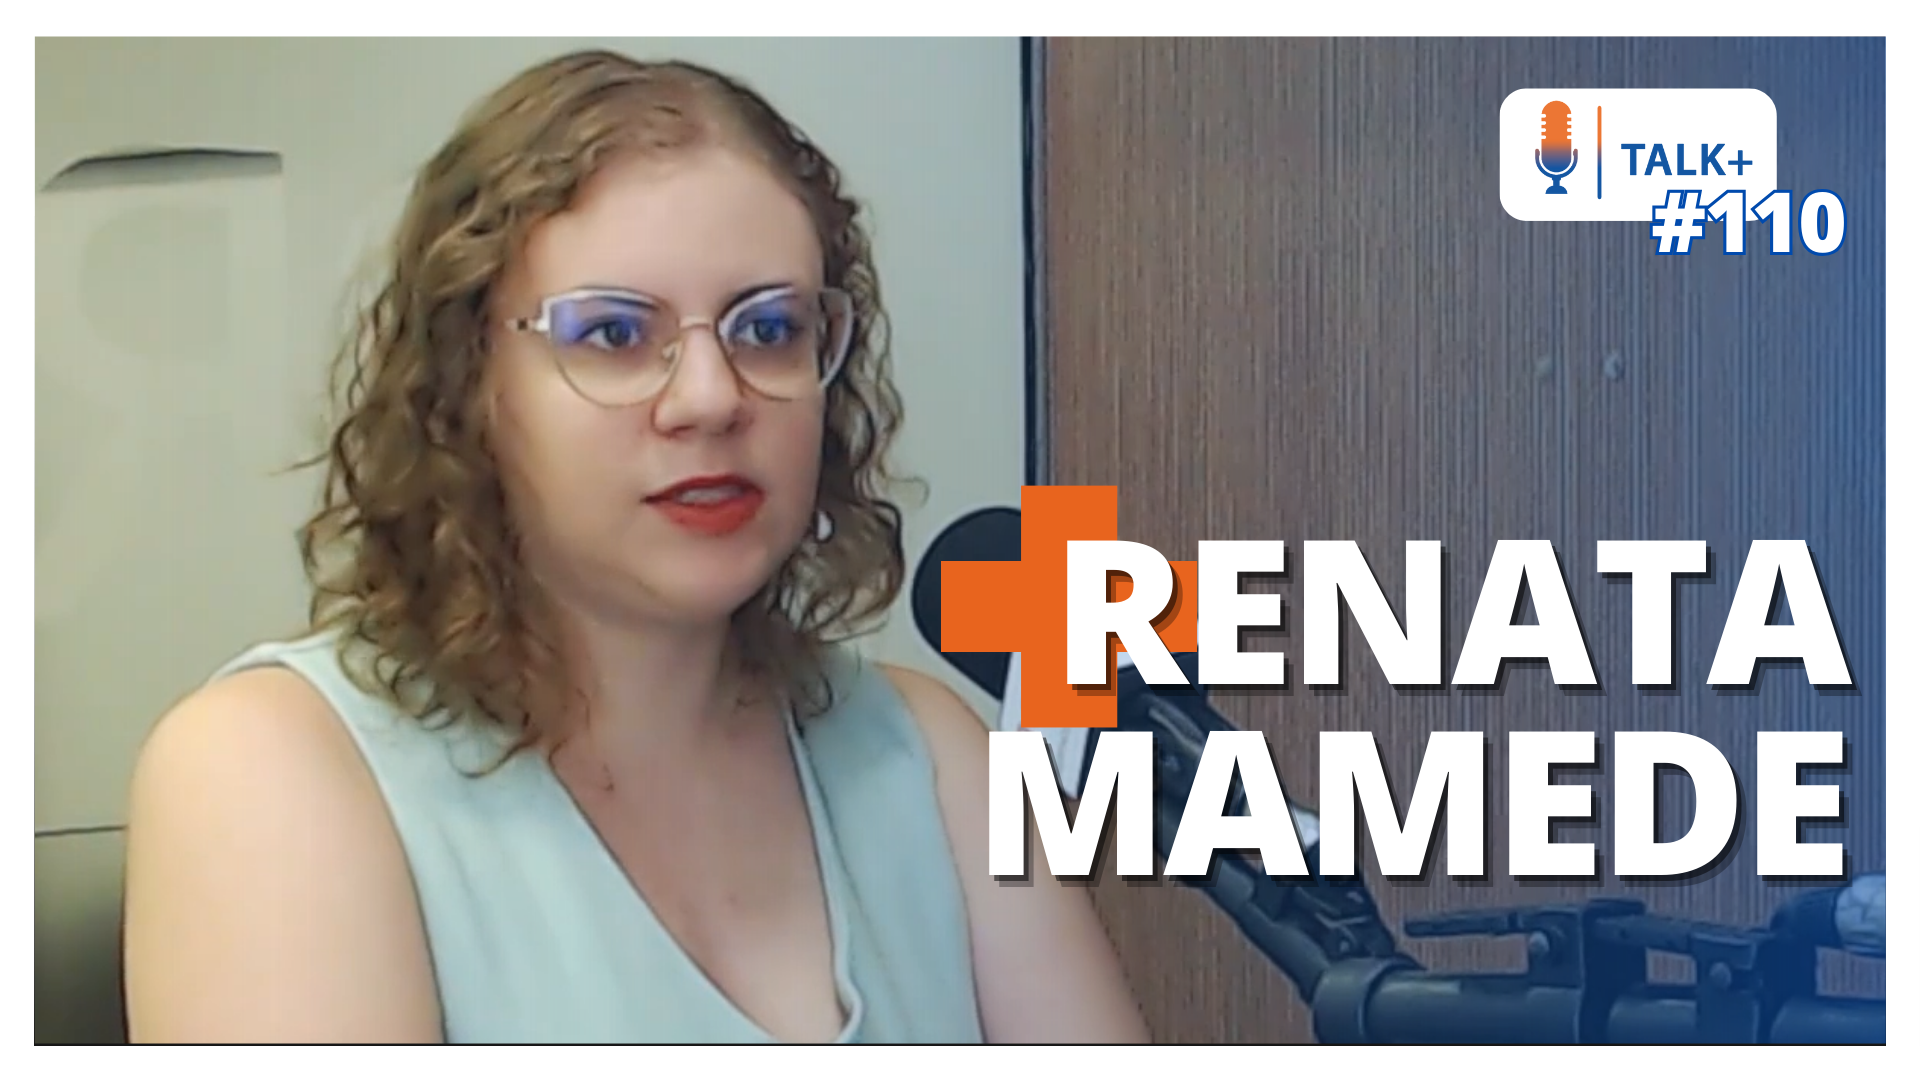 TALK+ #110: Renata Mamede, psicóloga de mulheres vítimas de violência